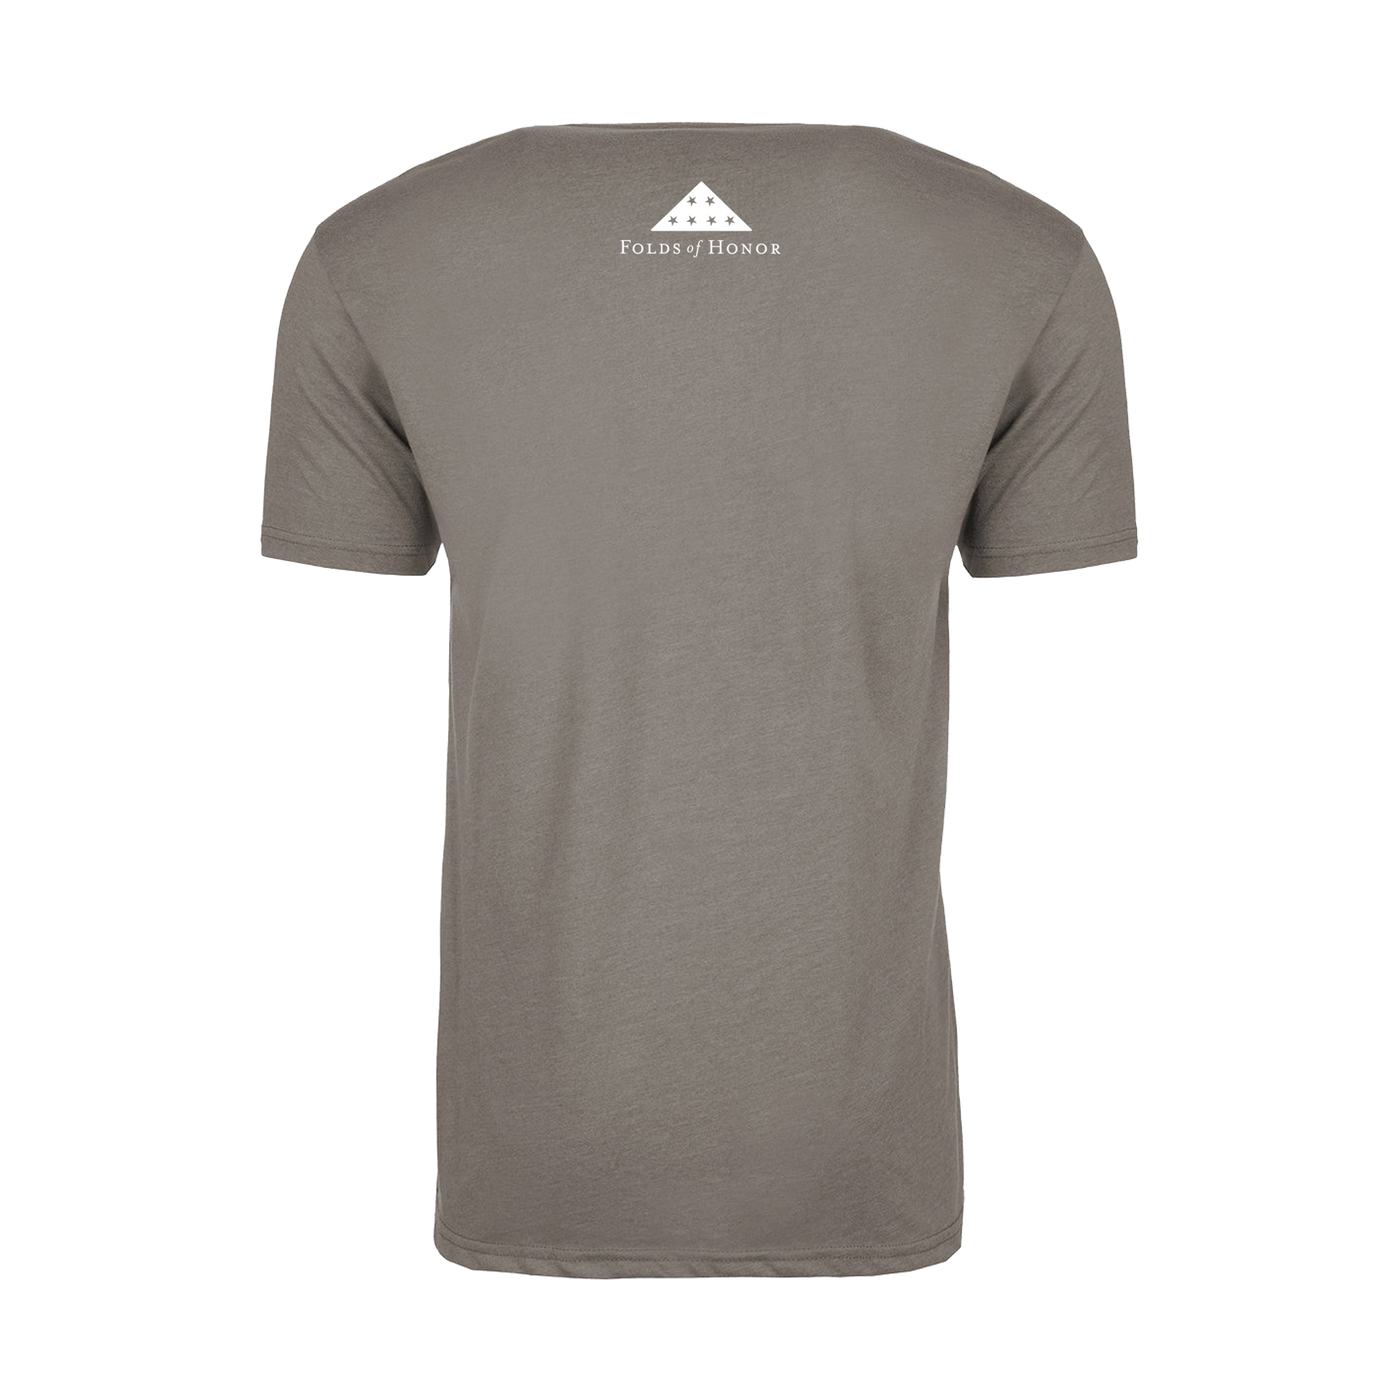 Logo T-Shirt - Stone Grey and White